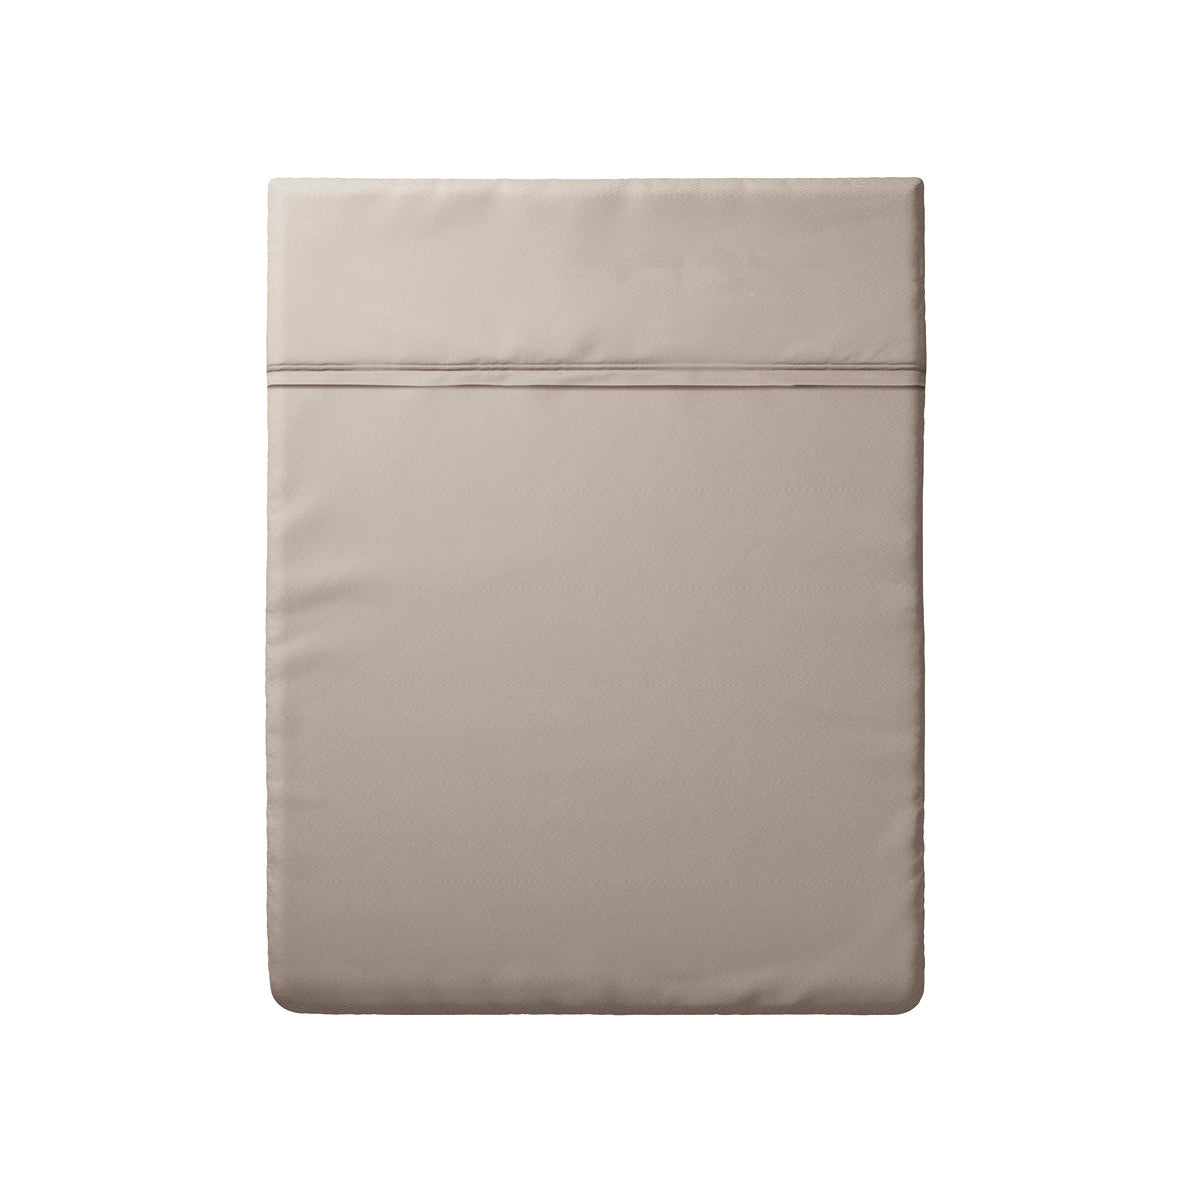 Flat sheet cotton satin - Uni Taupe